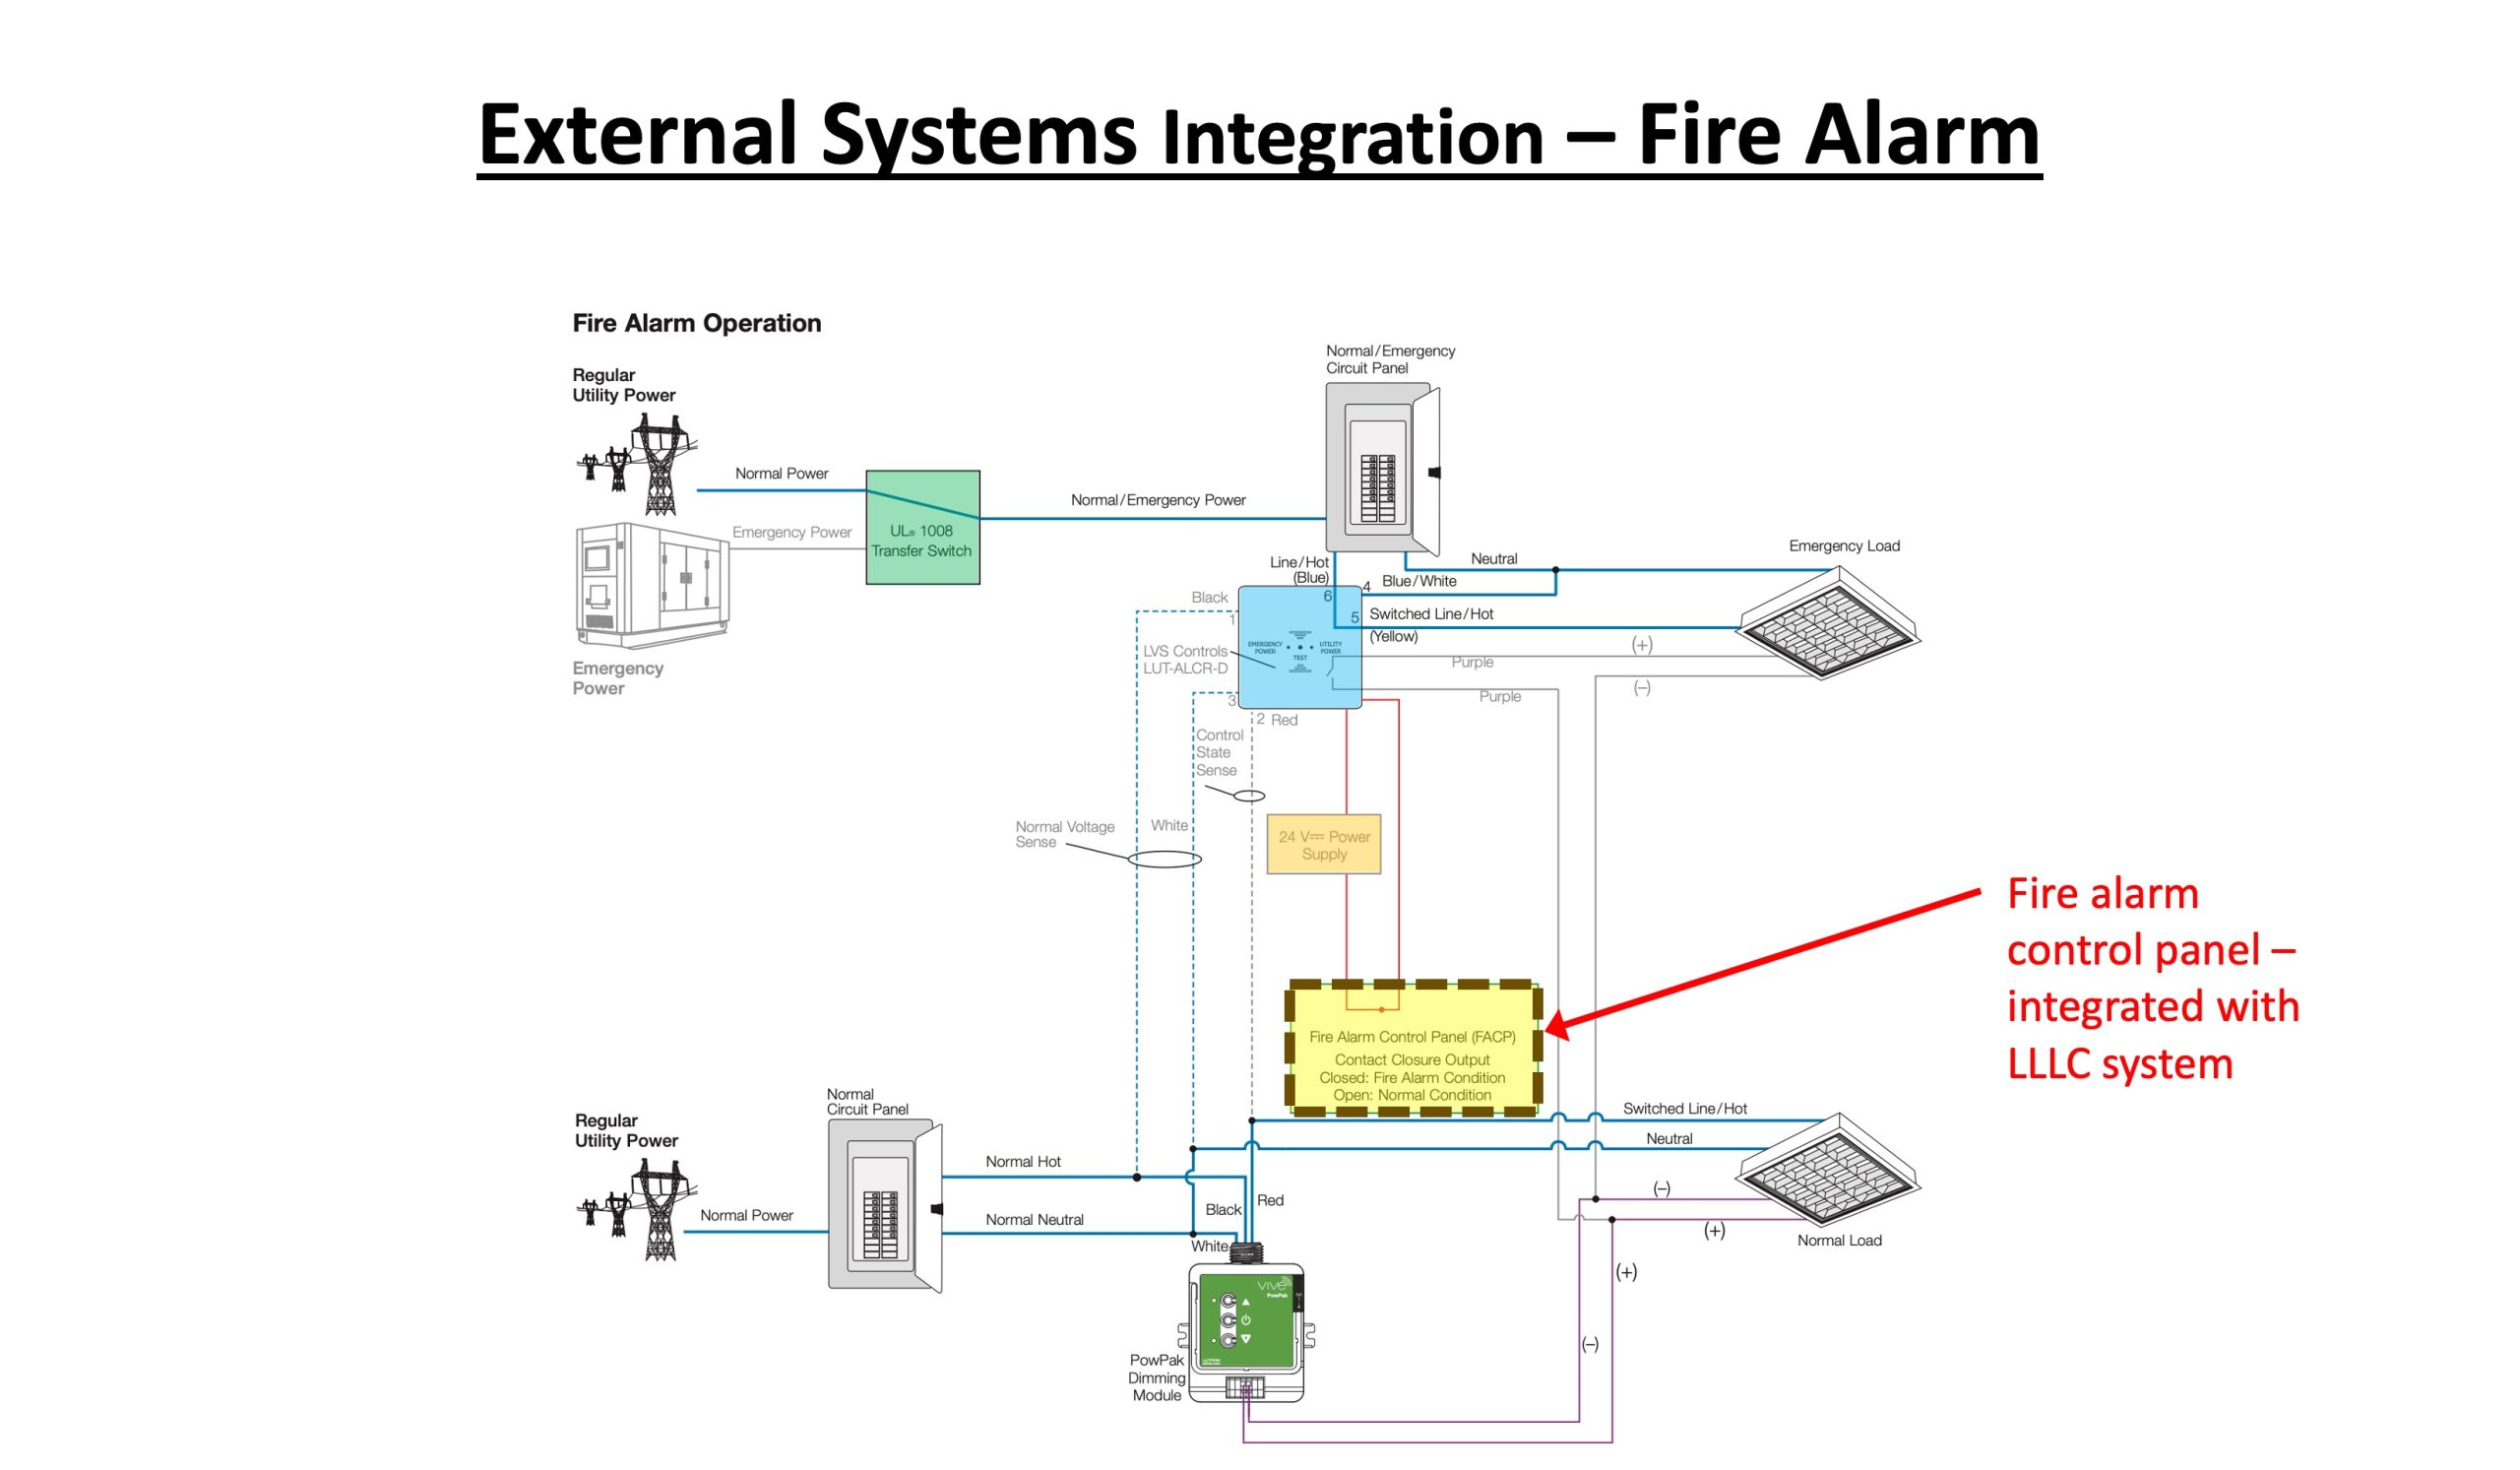 External systems integration - fire alarm